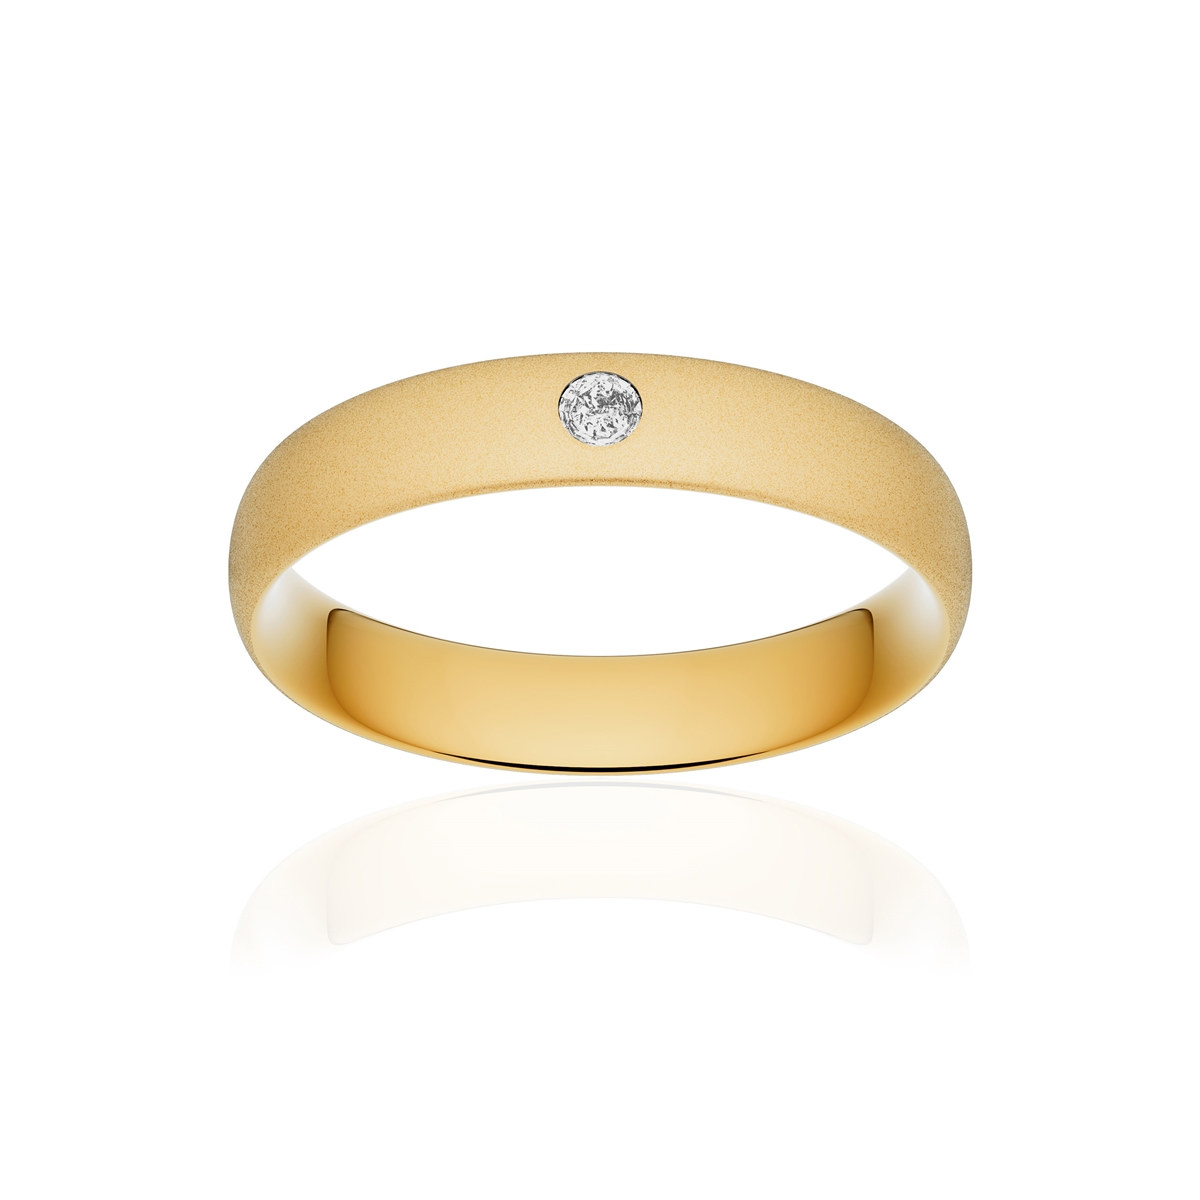 Alliance or 750 jaune sablé demi-jonc confort 4,5mm diamant brillant